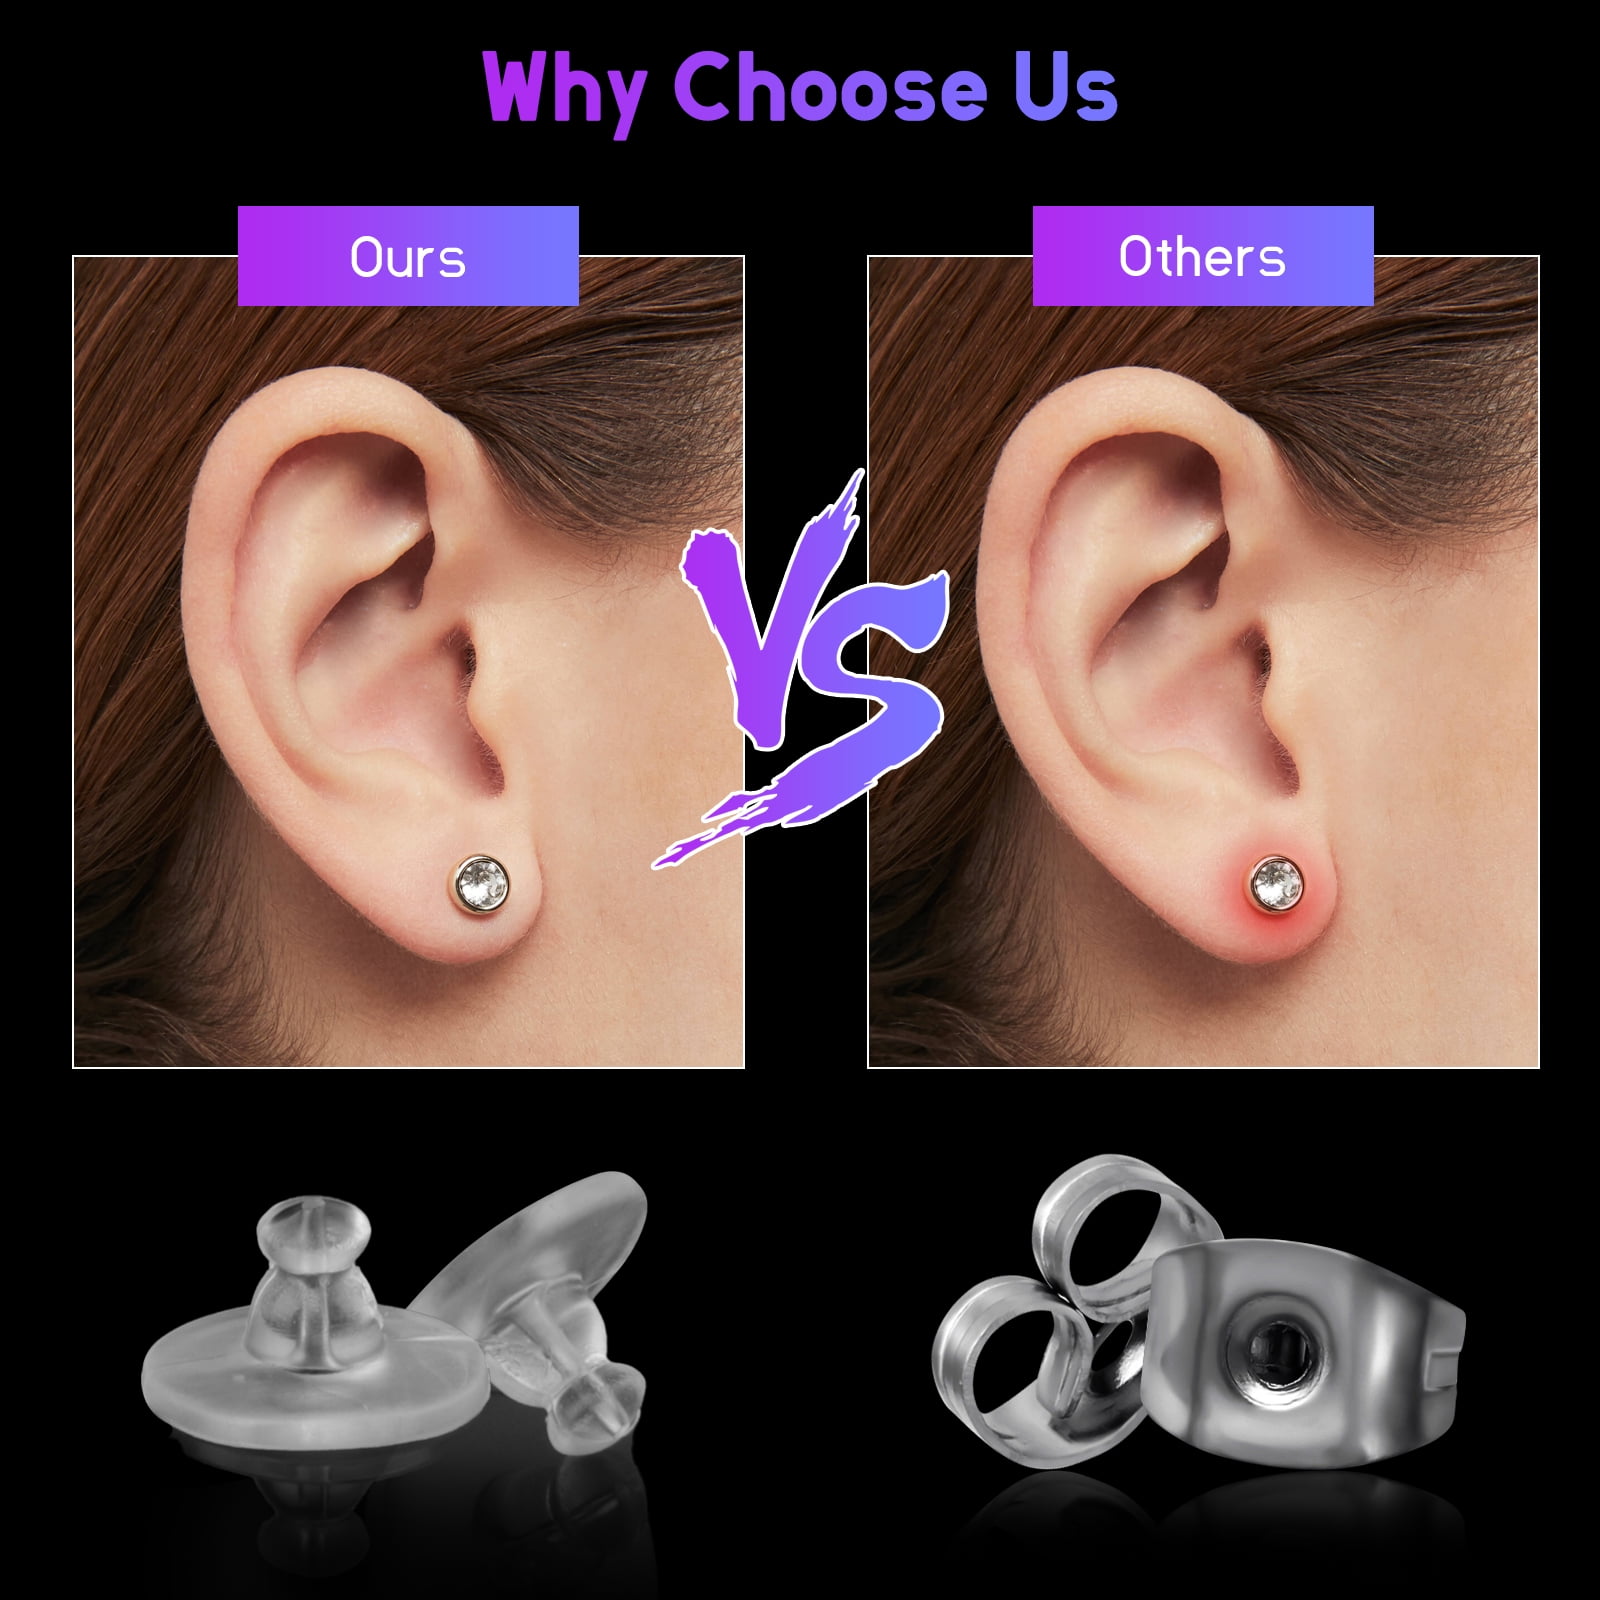 100Pcs Clear Rubber Earring Safety Backs for Fish Hook Earrings YS